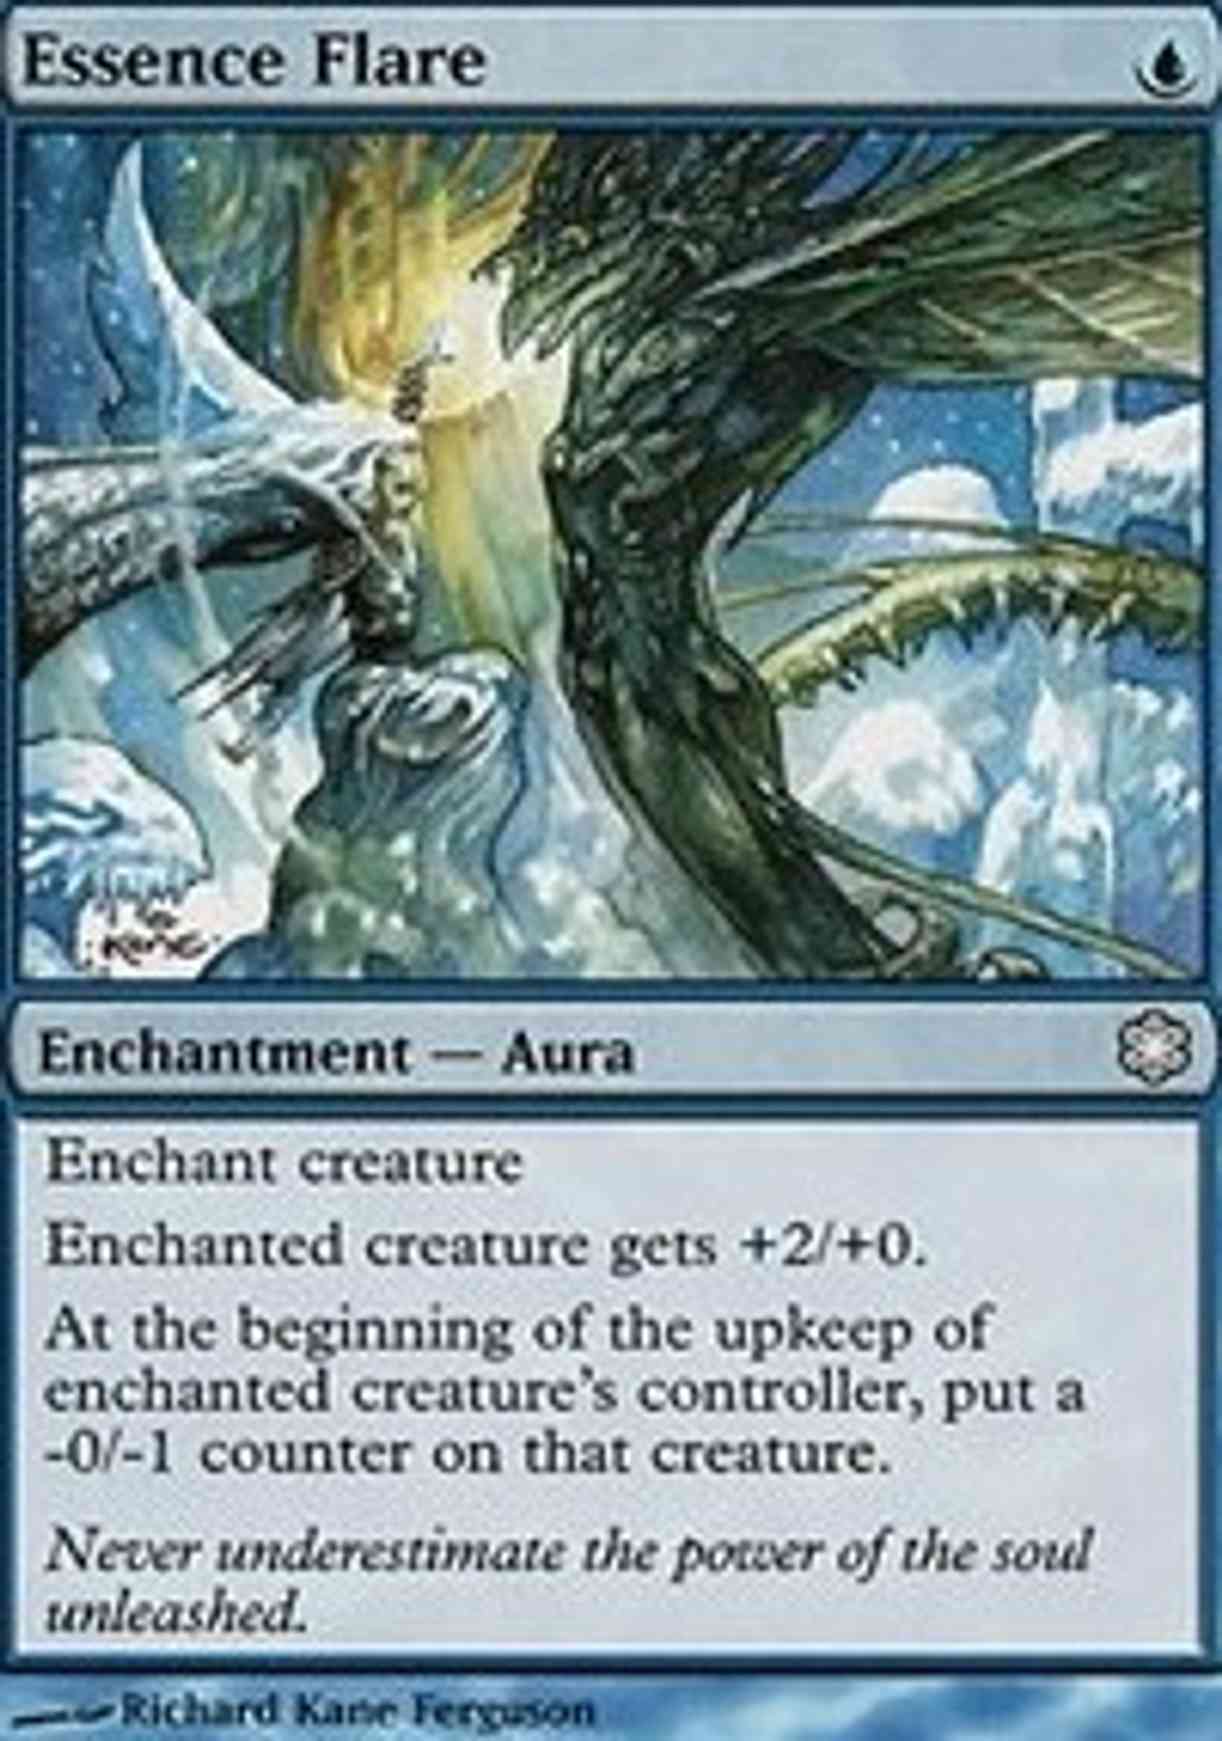 Essence Flare magic card front